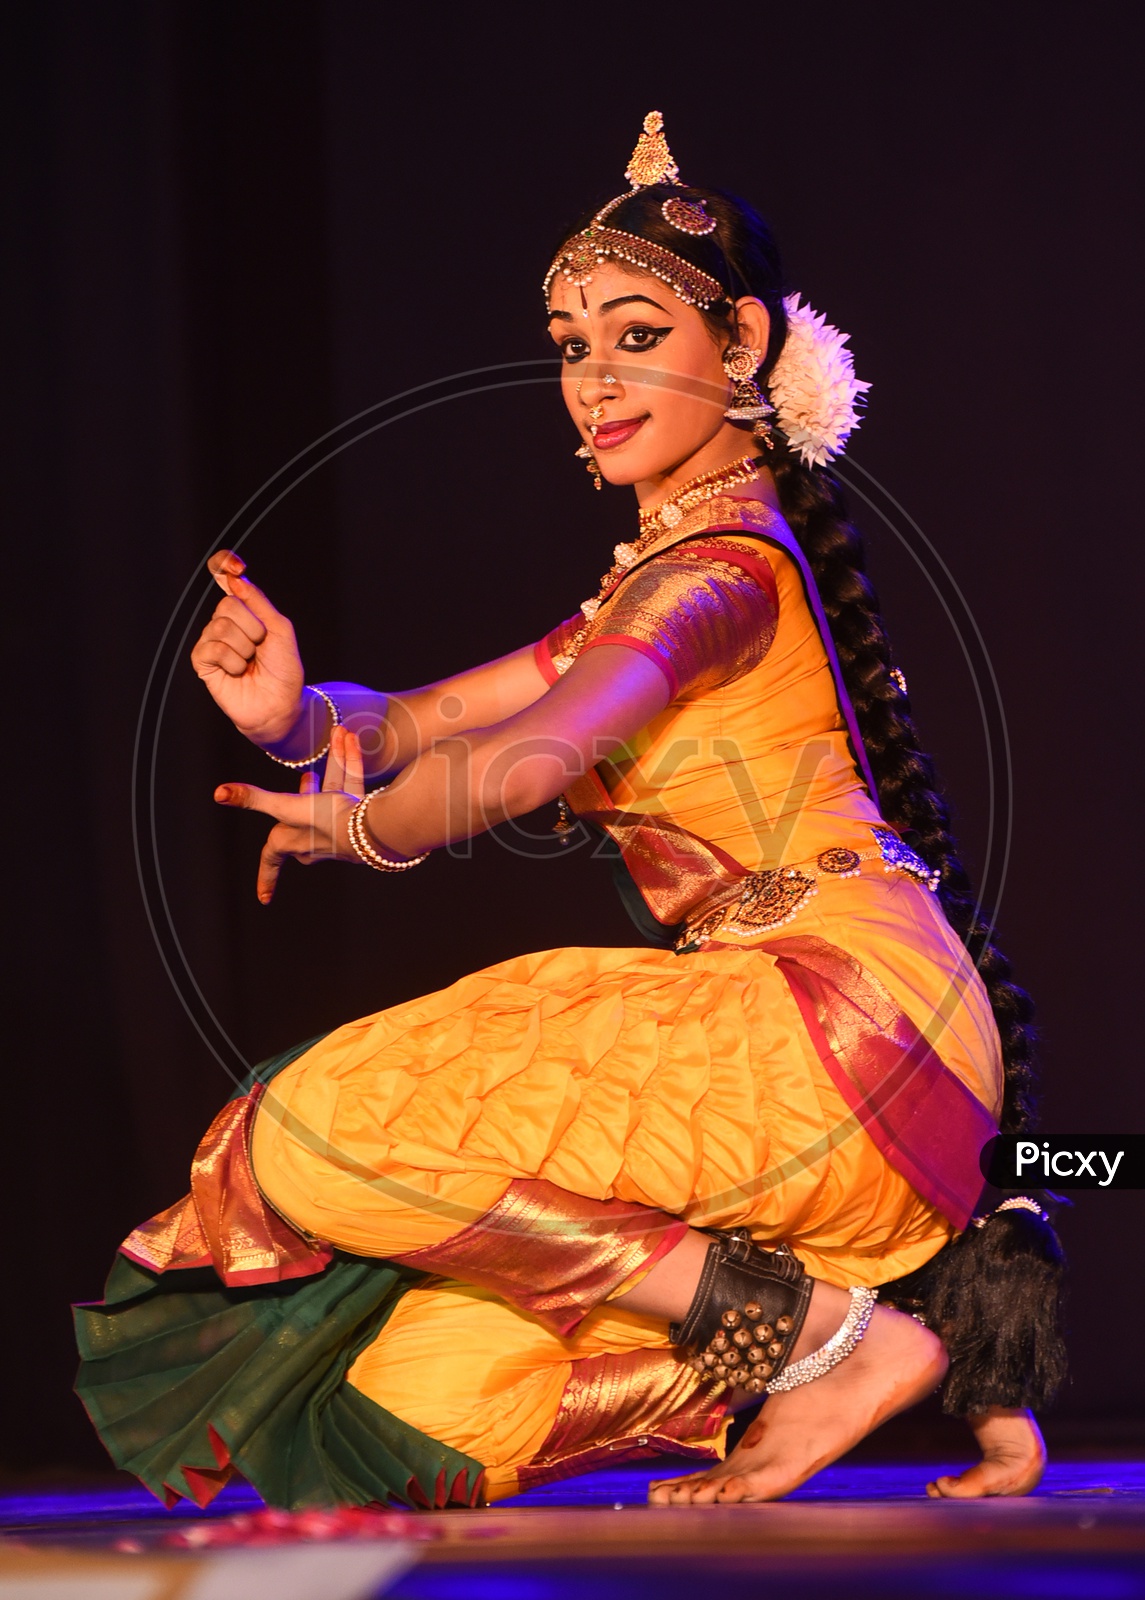 it's my latest art of Radha Krishna with beautiful ❤️ love dancing pose,plz  say something